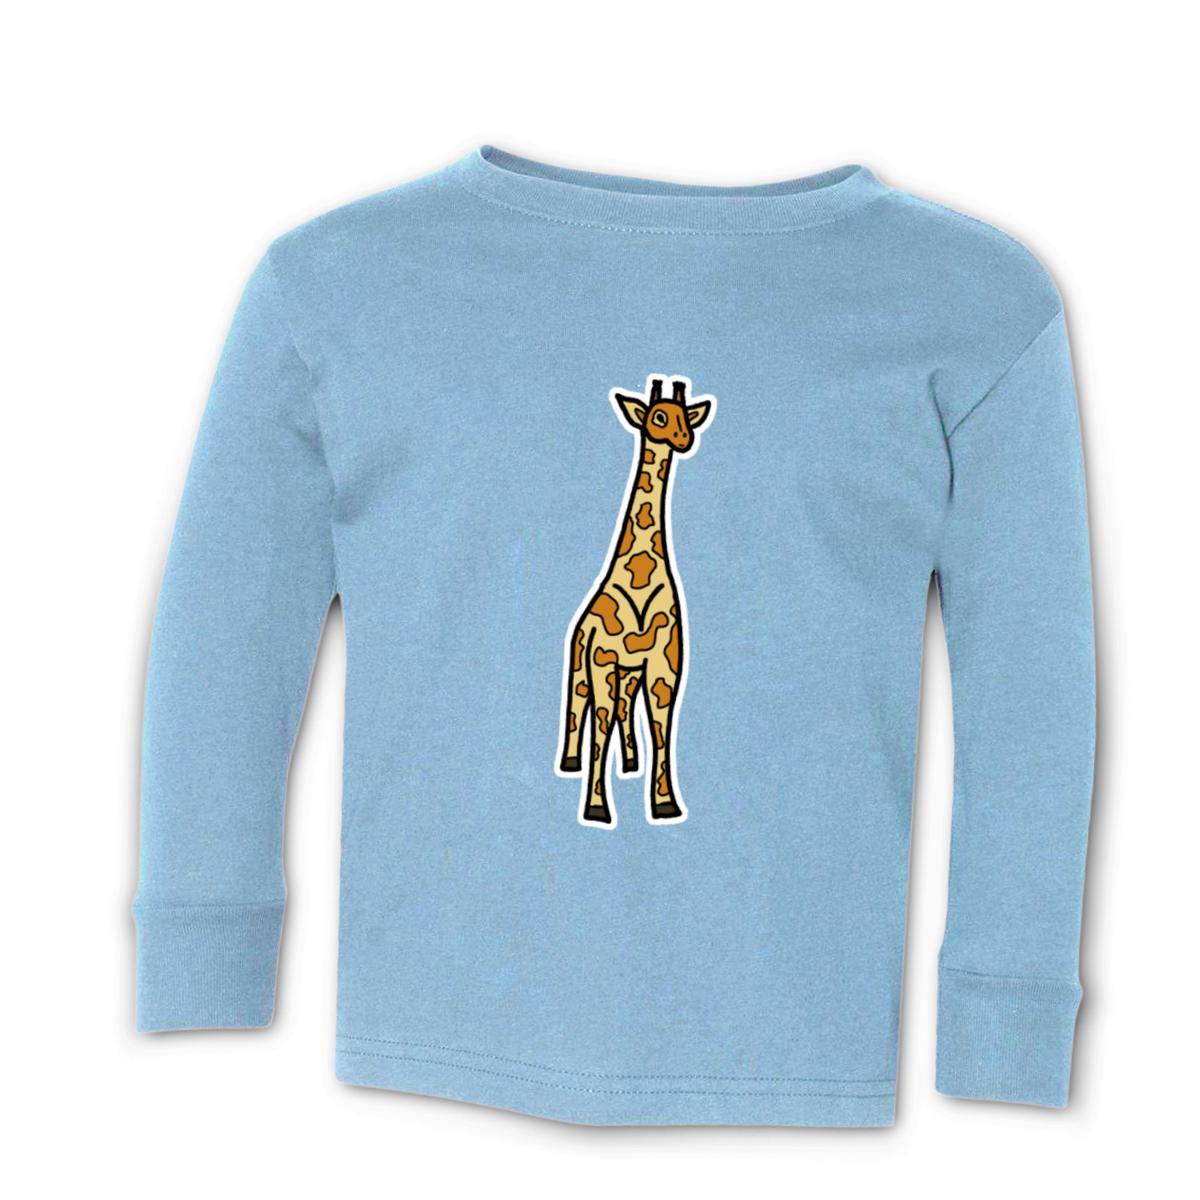 Toy Giraffe Kid's Long Sleeve Tee Small light-blue